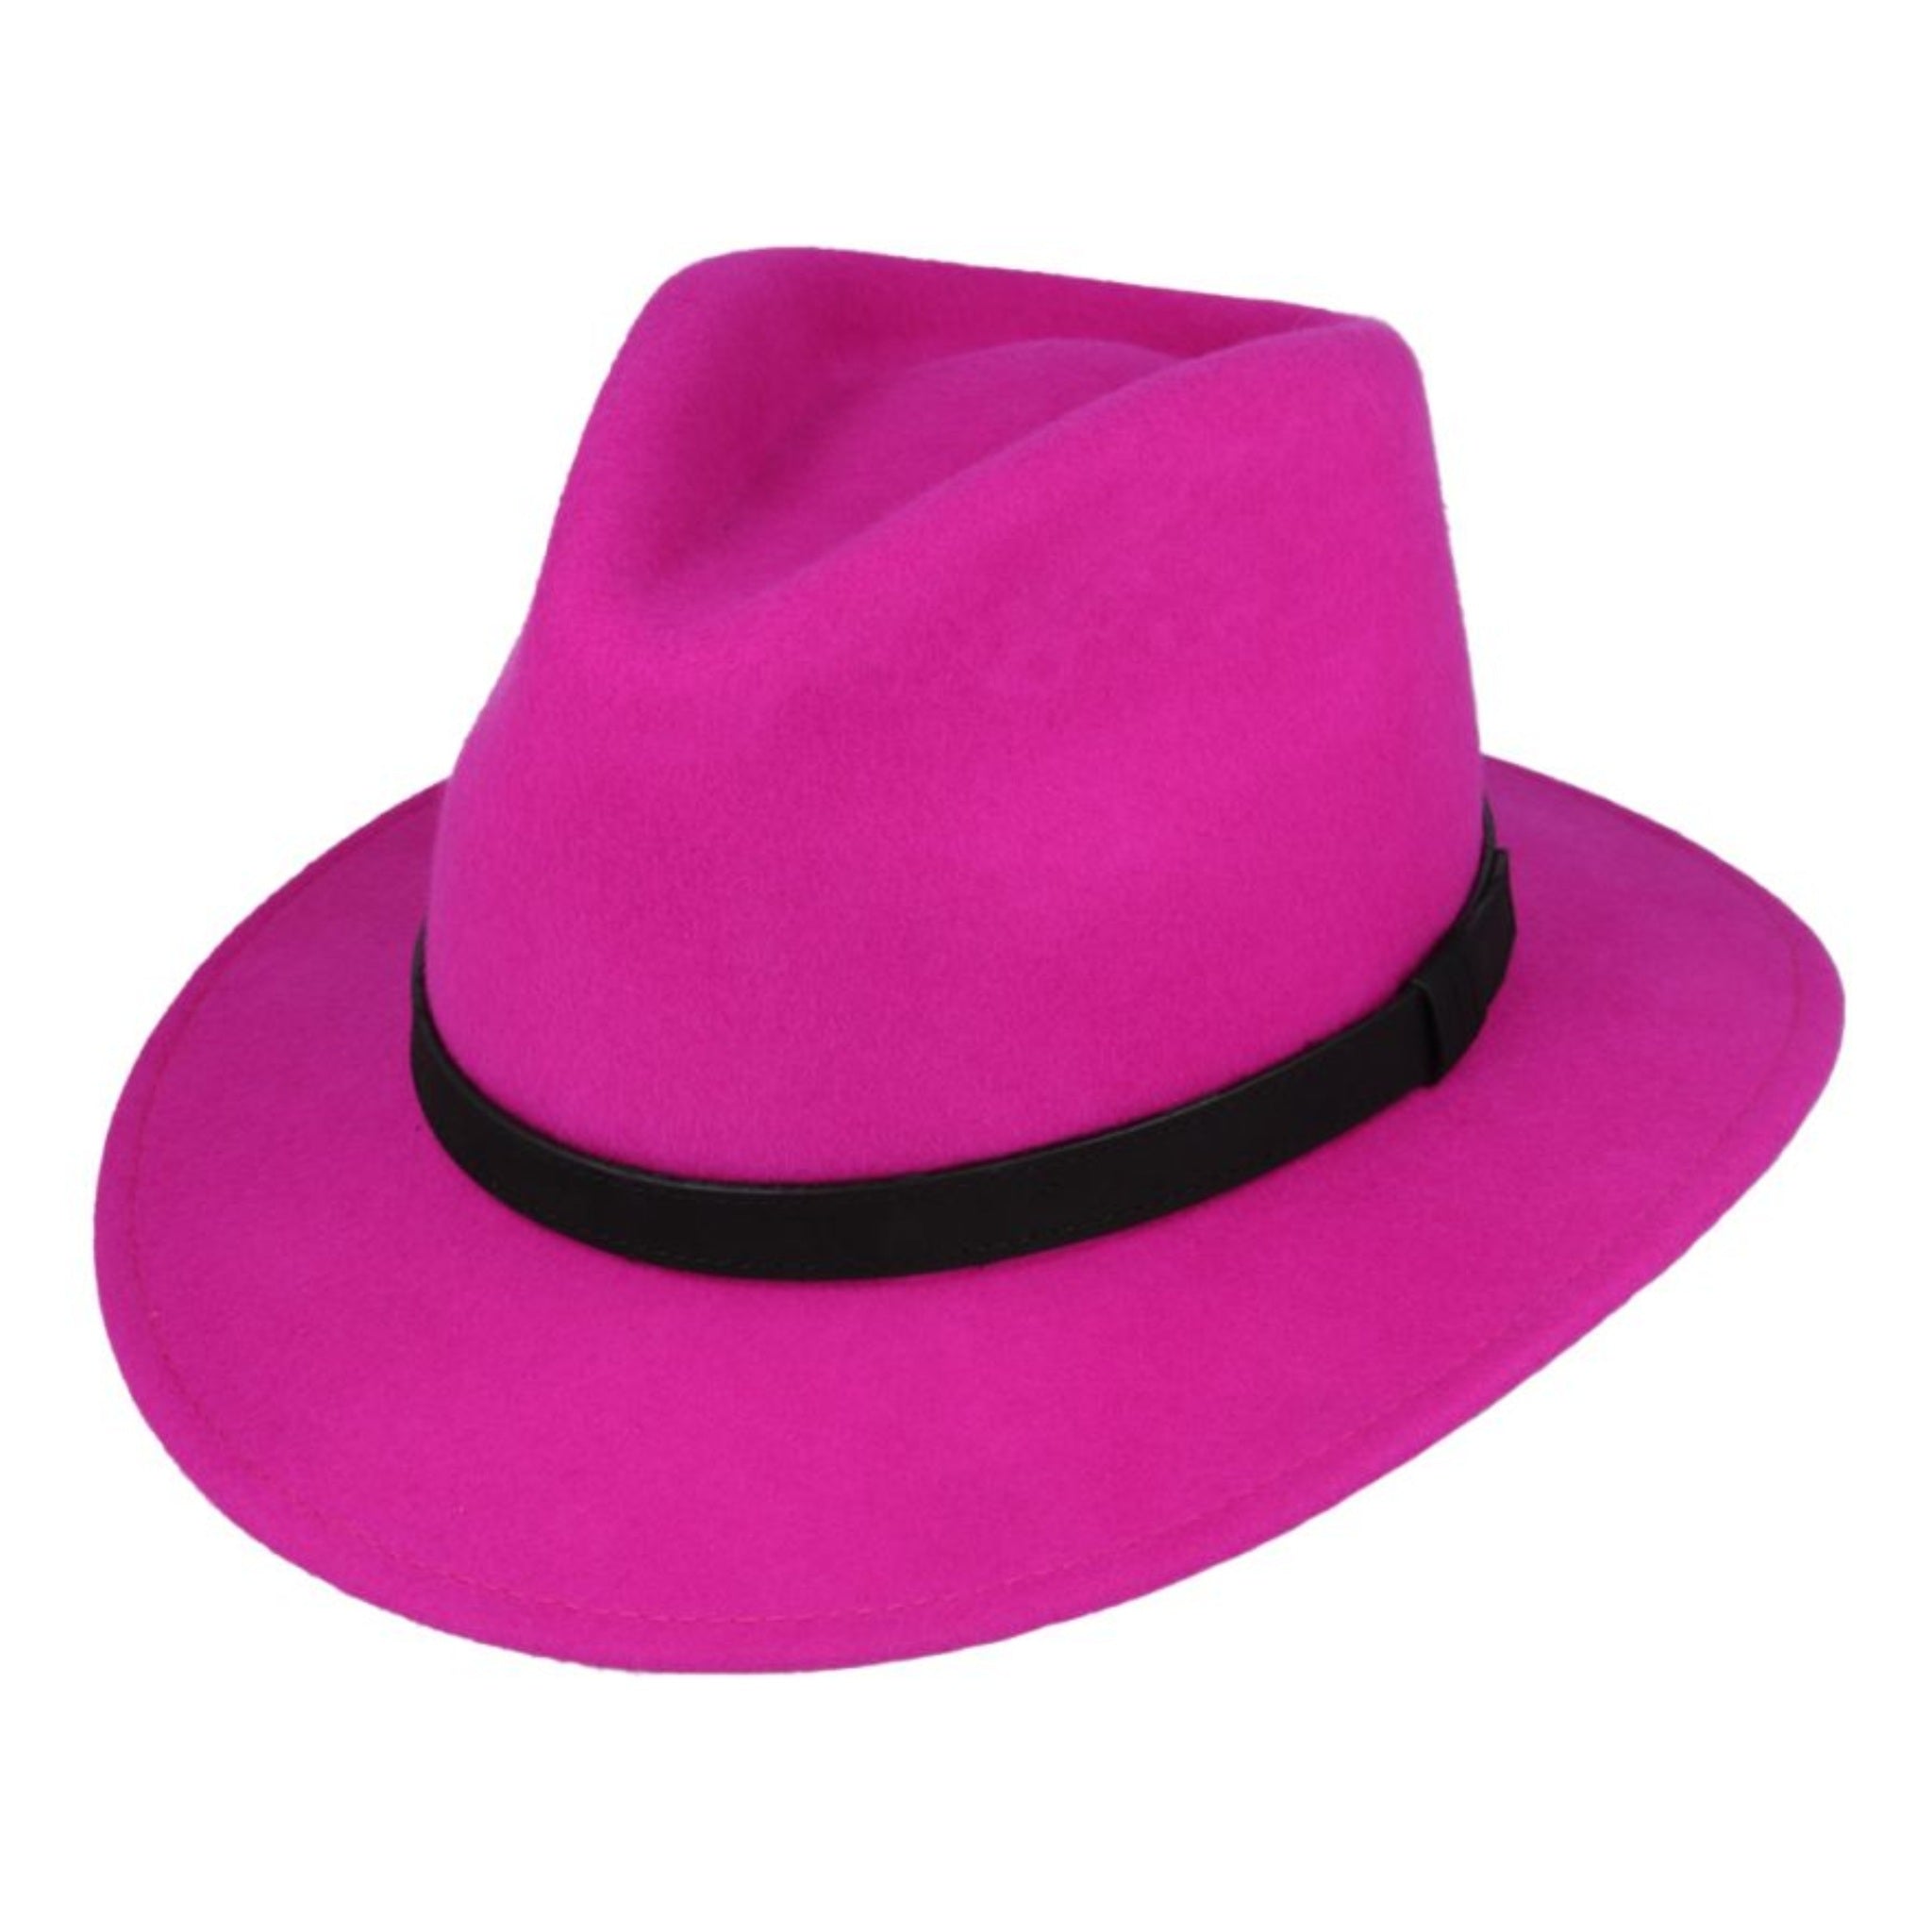 The Hat Shop Maz Wool Felt Fedora 'Fuchsia'